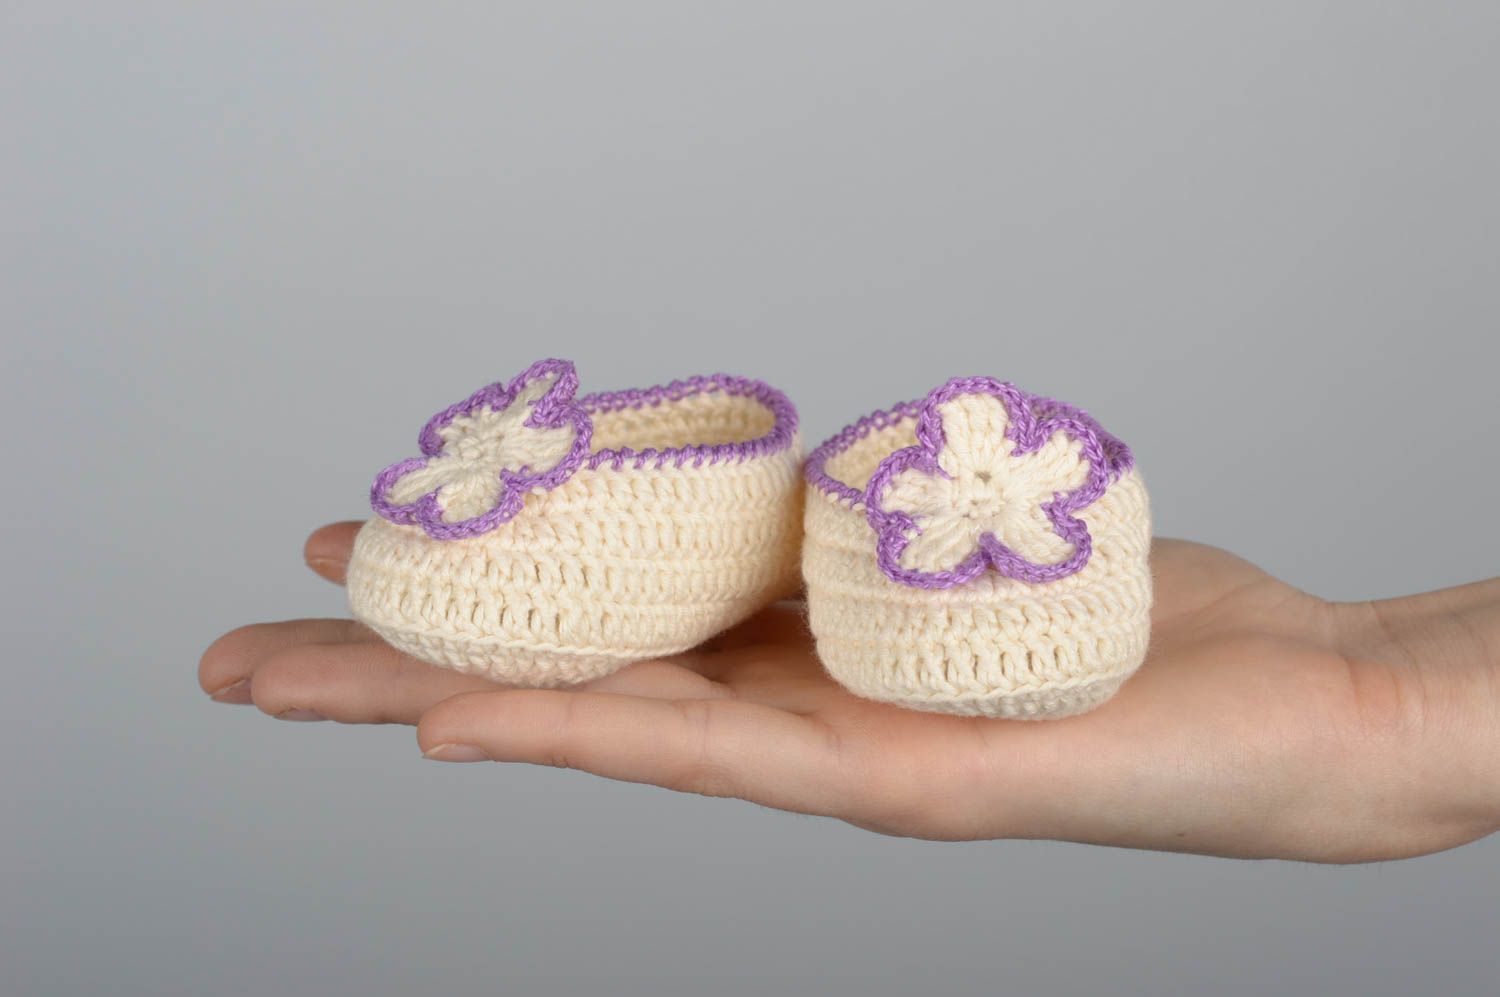 Beautiful handmade crochet baby booties fashion baby accessories crochet ideas photo 5